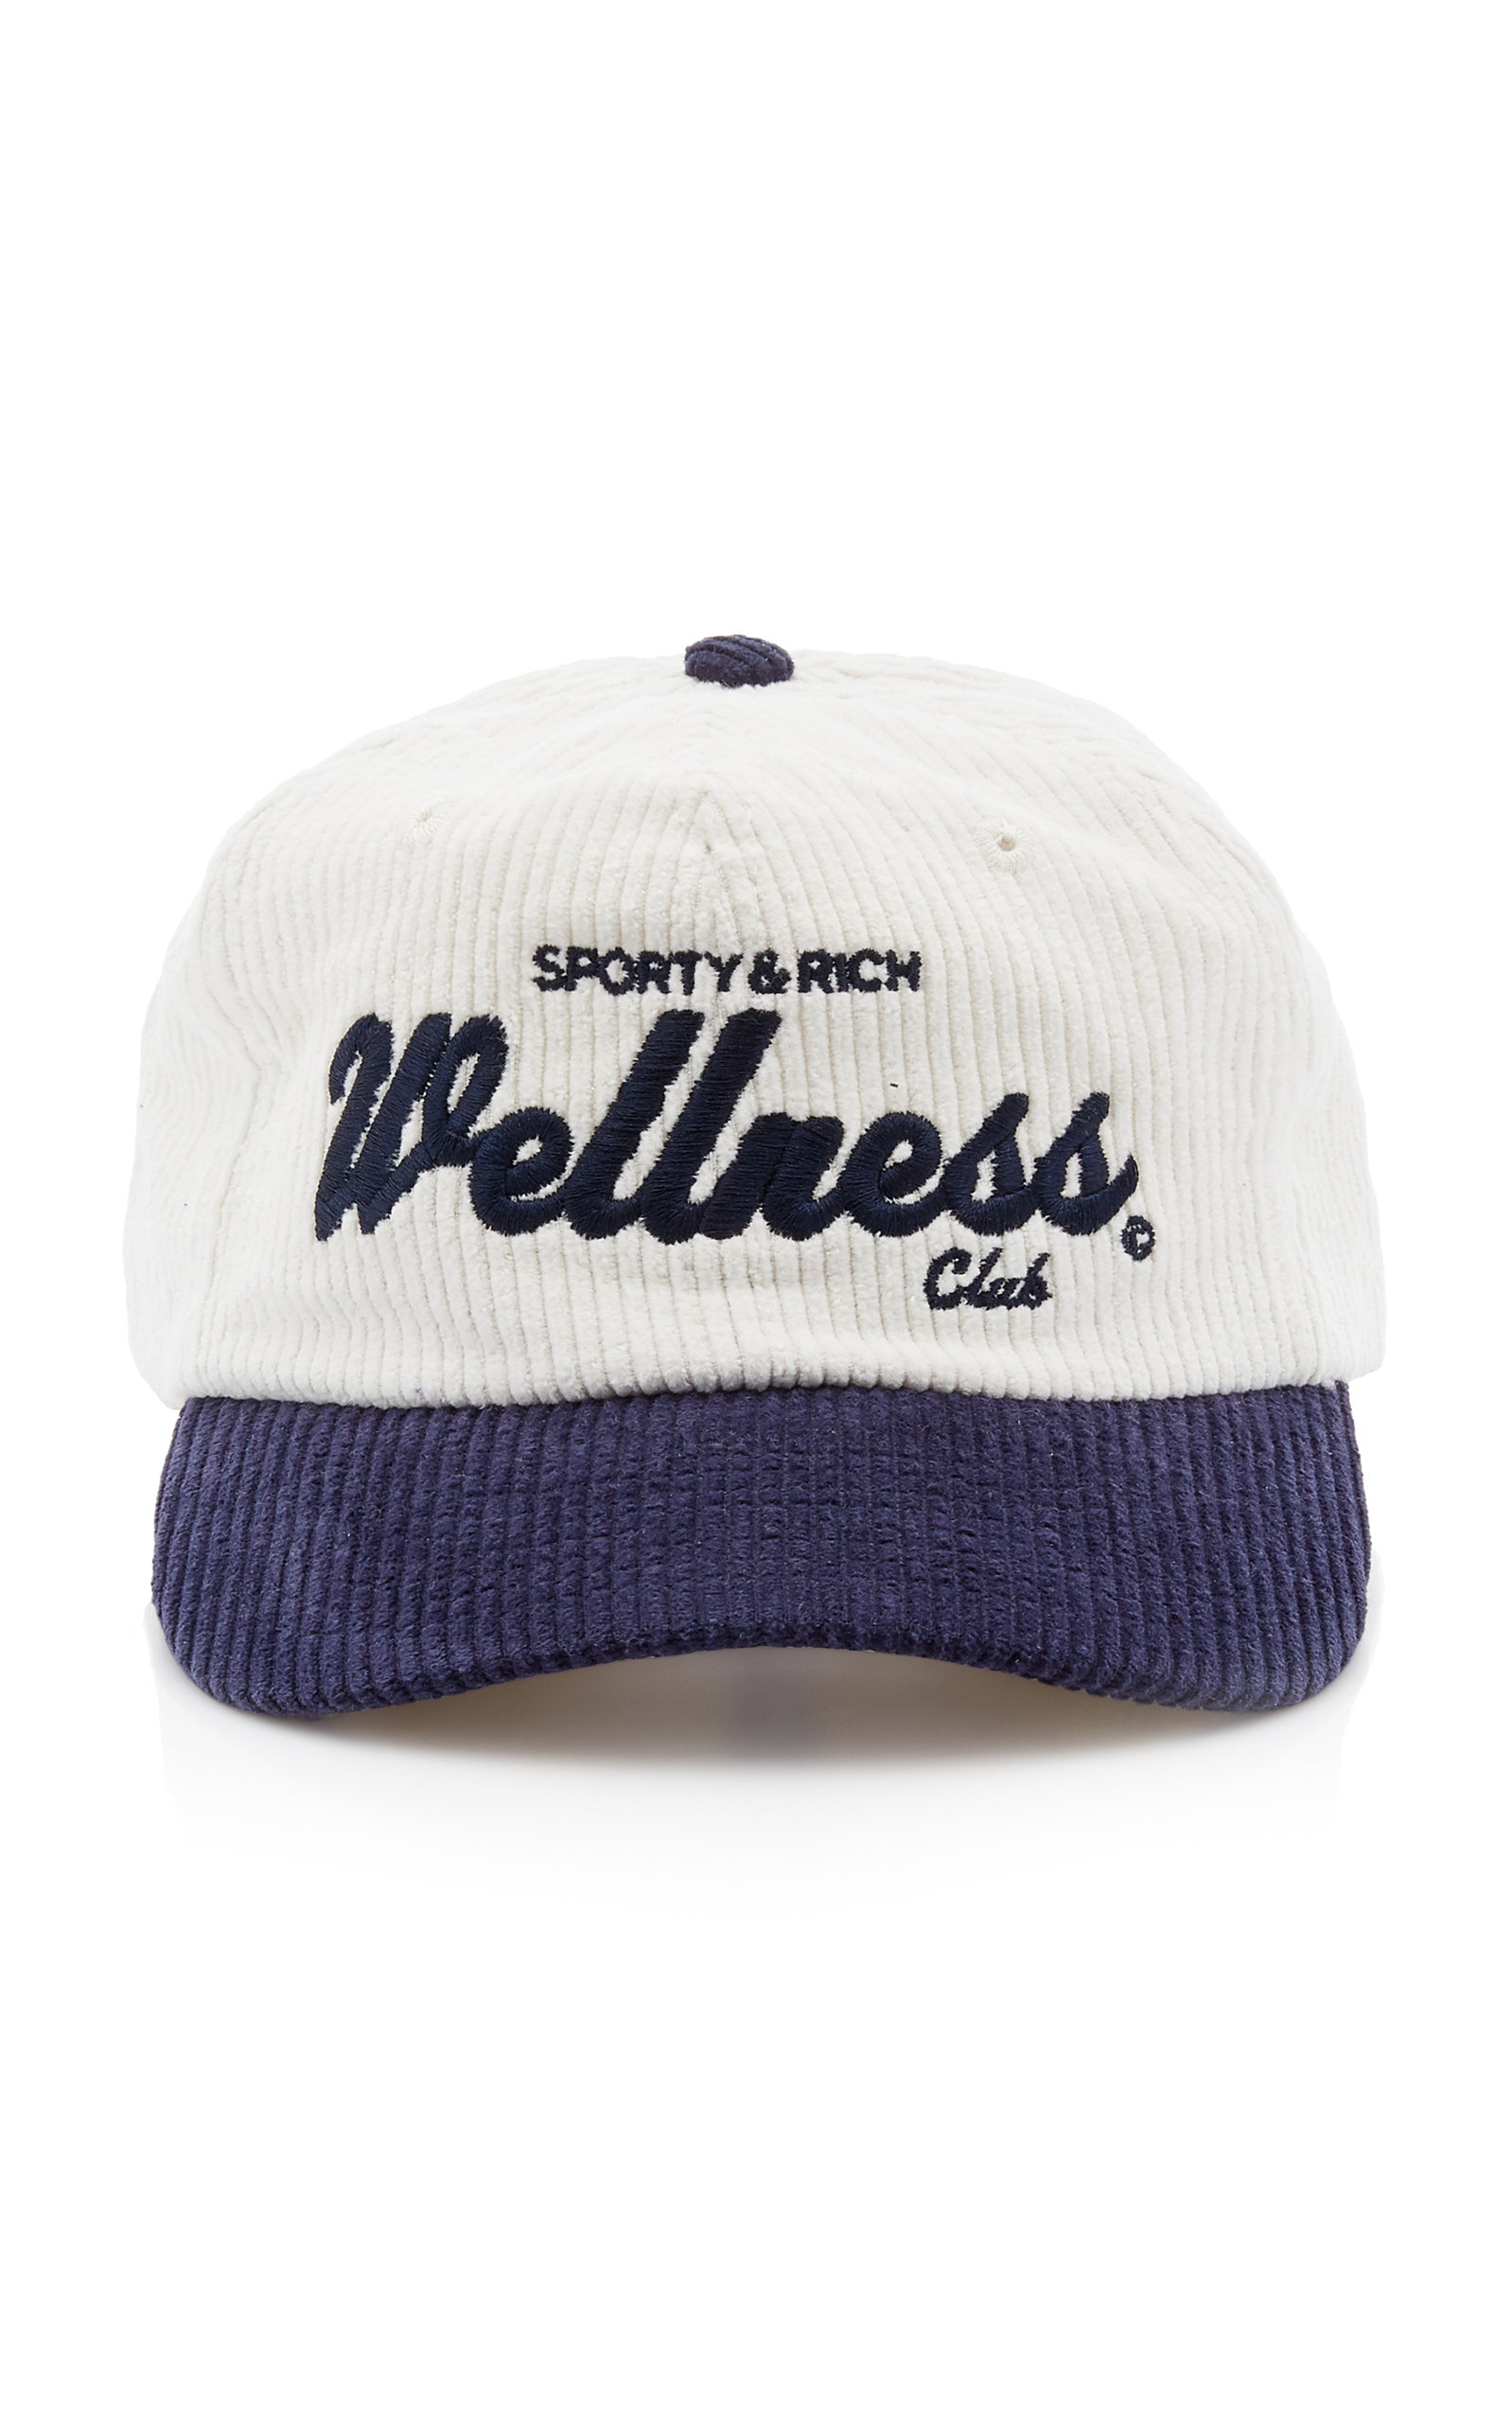 Sporty & Rich - Women's Wellness Club Cotton Corduroy Baseball Hat - Navy - Best Seller - Moda Operandi